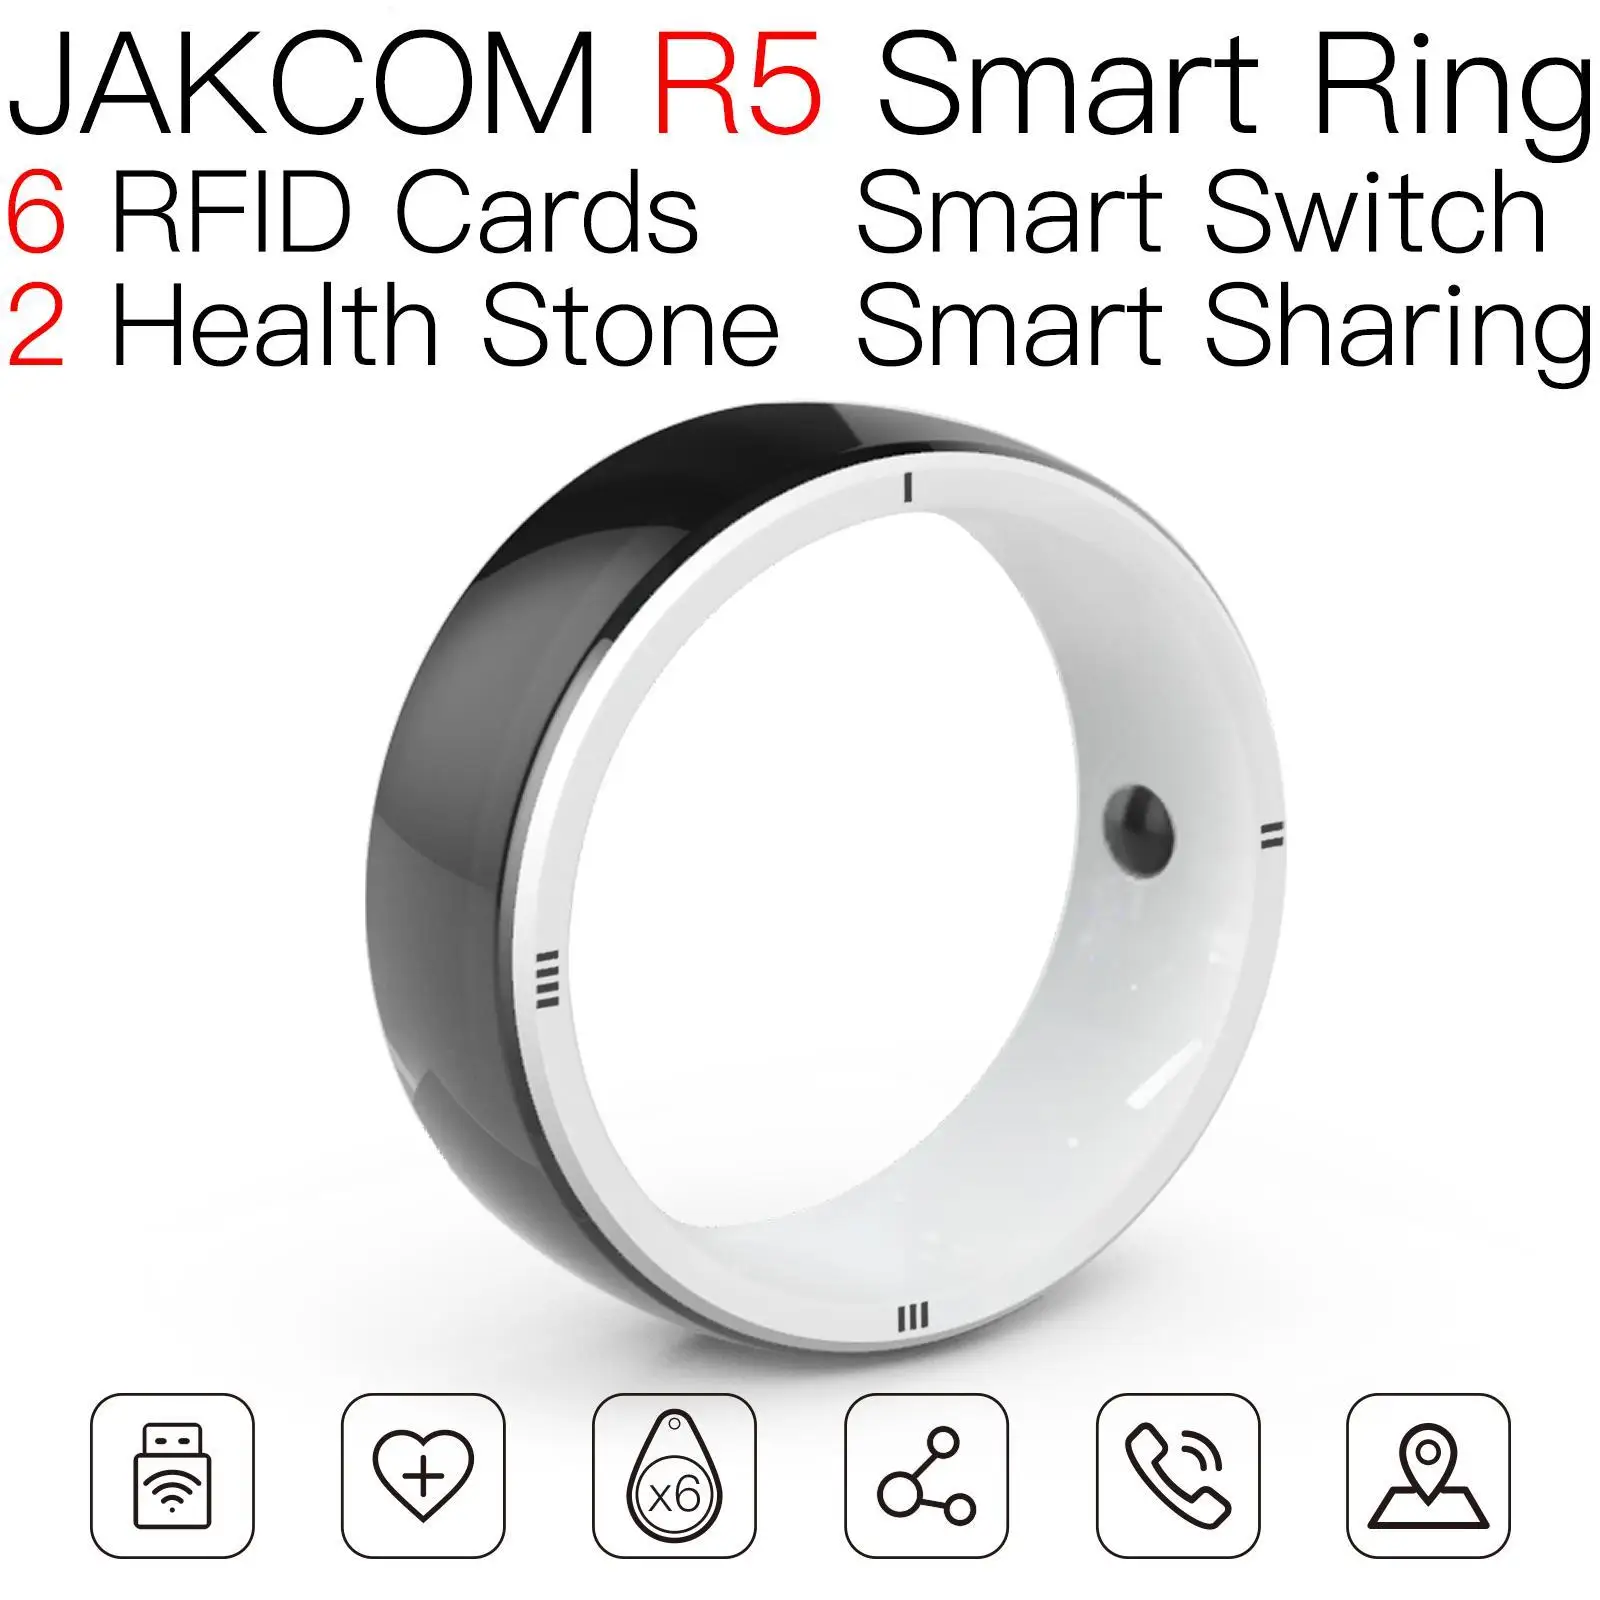 

JAKCOM R5 Smart Ring Nice than nfc tag injectables hf rfid reader magic vibration acnh furnitures island vip uhf sticker